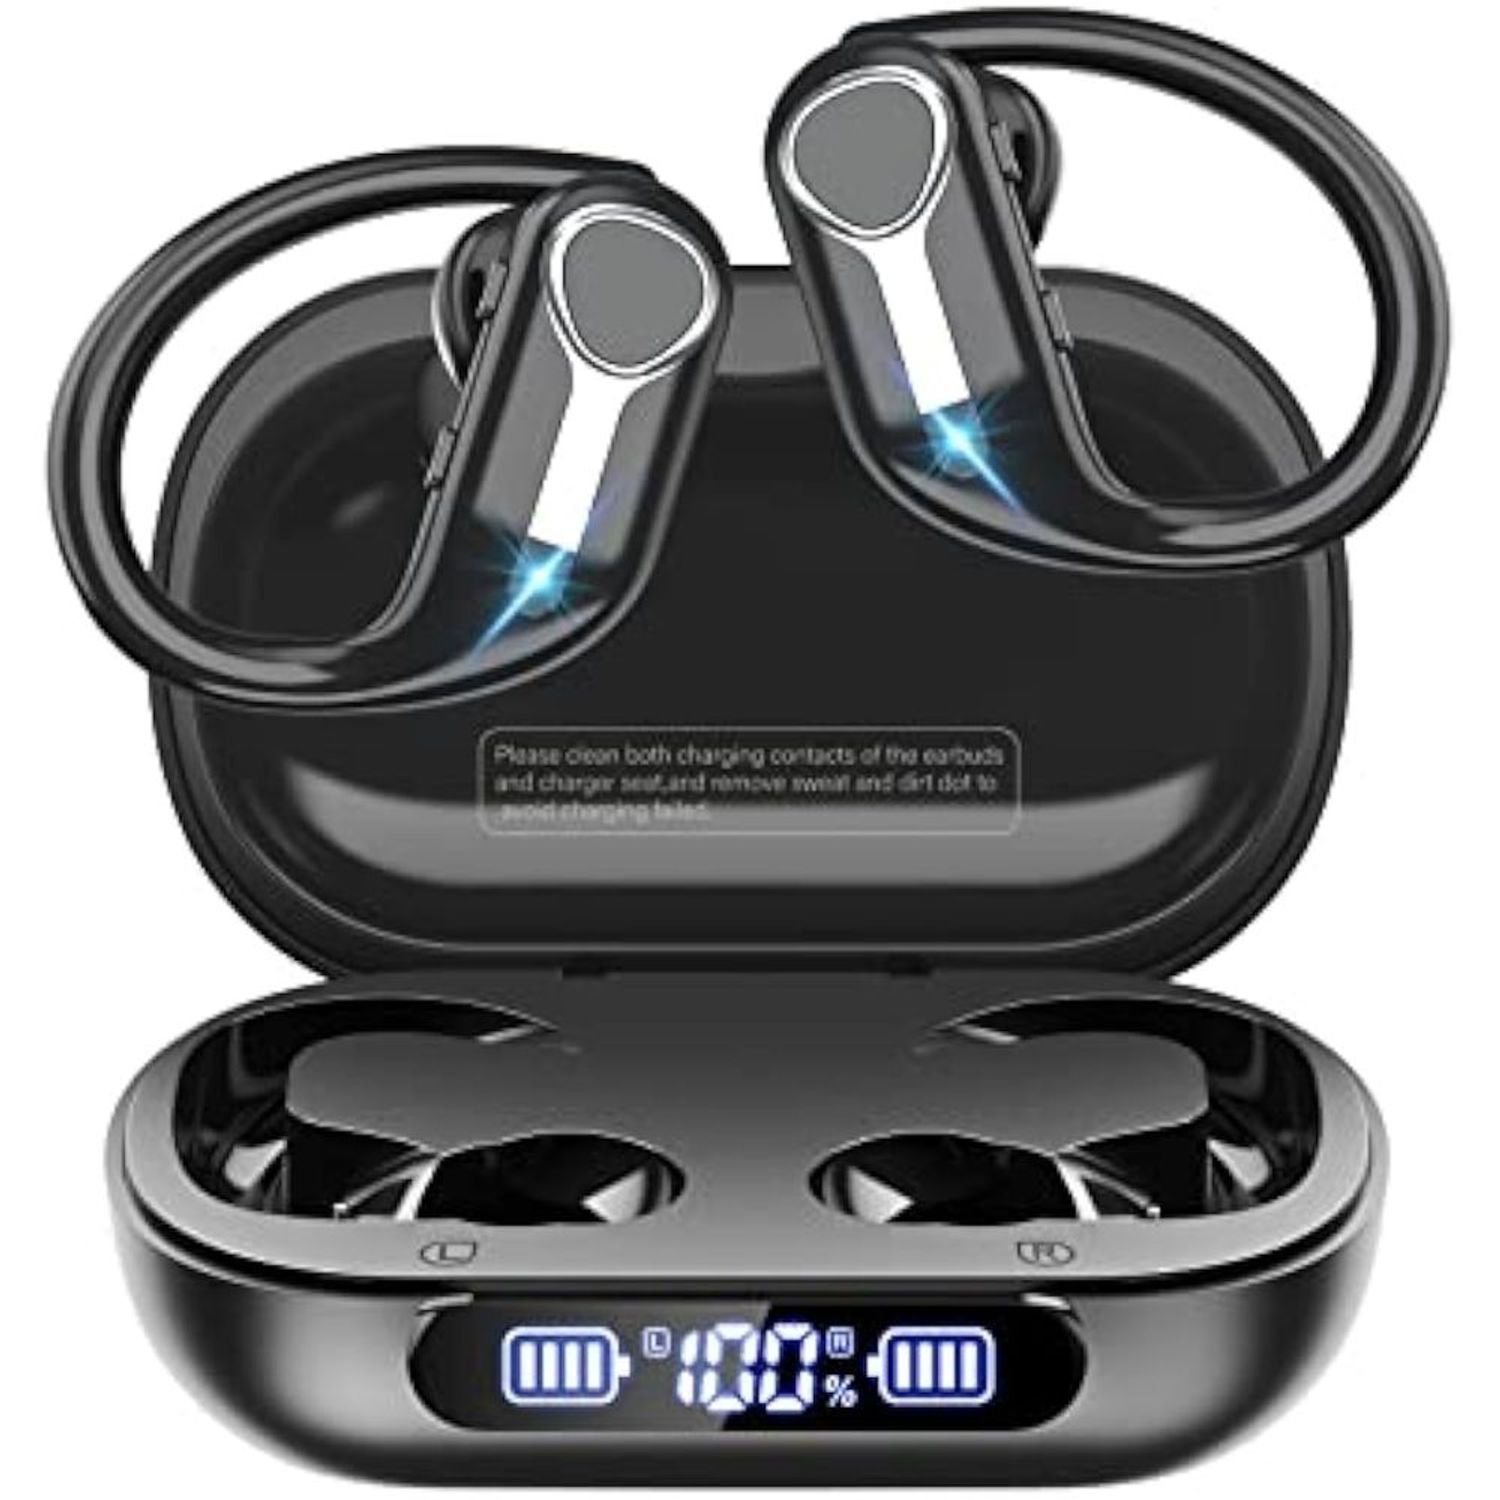 Auriculares Inalambricos Bluetooth Microfono Blau 50 hrs Duración I Oechsle  - Oechsle